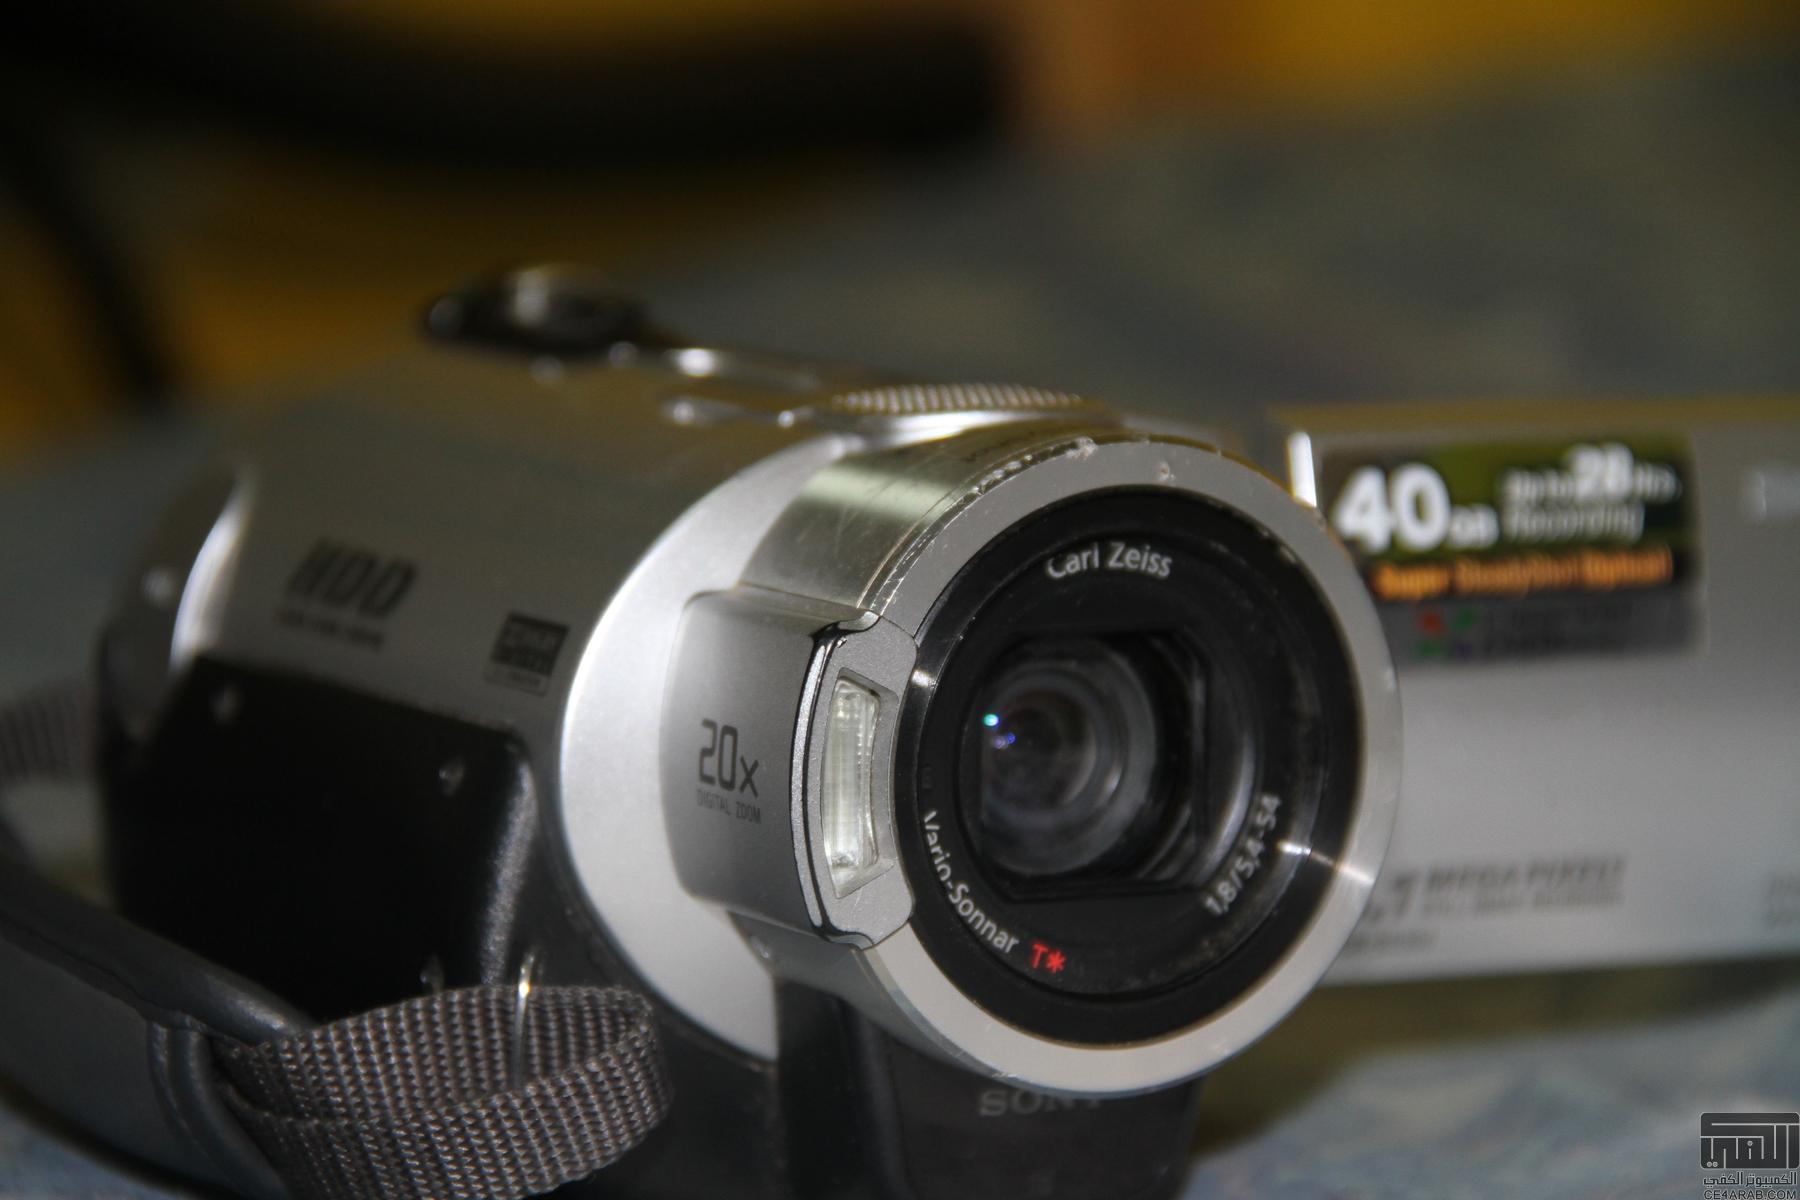 للبيع كاميرا سوني هاندي كام dcr-sr300